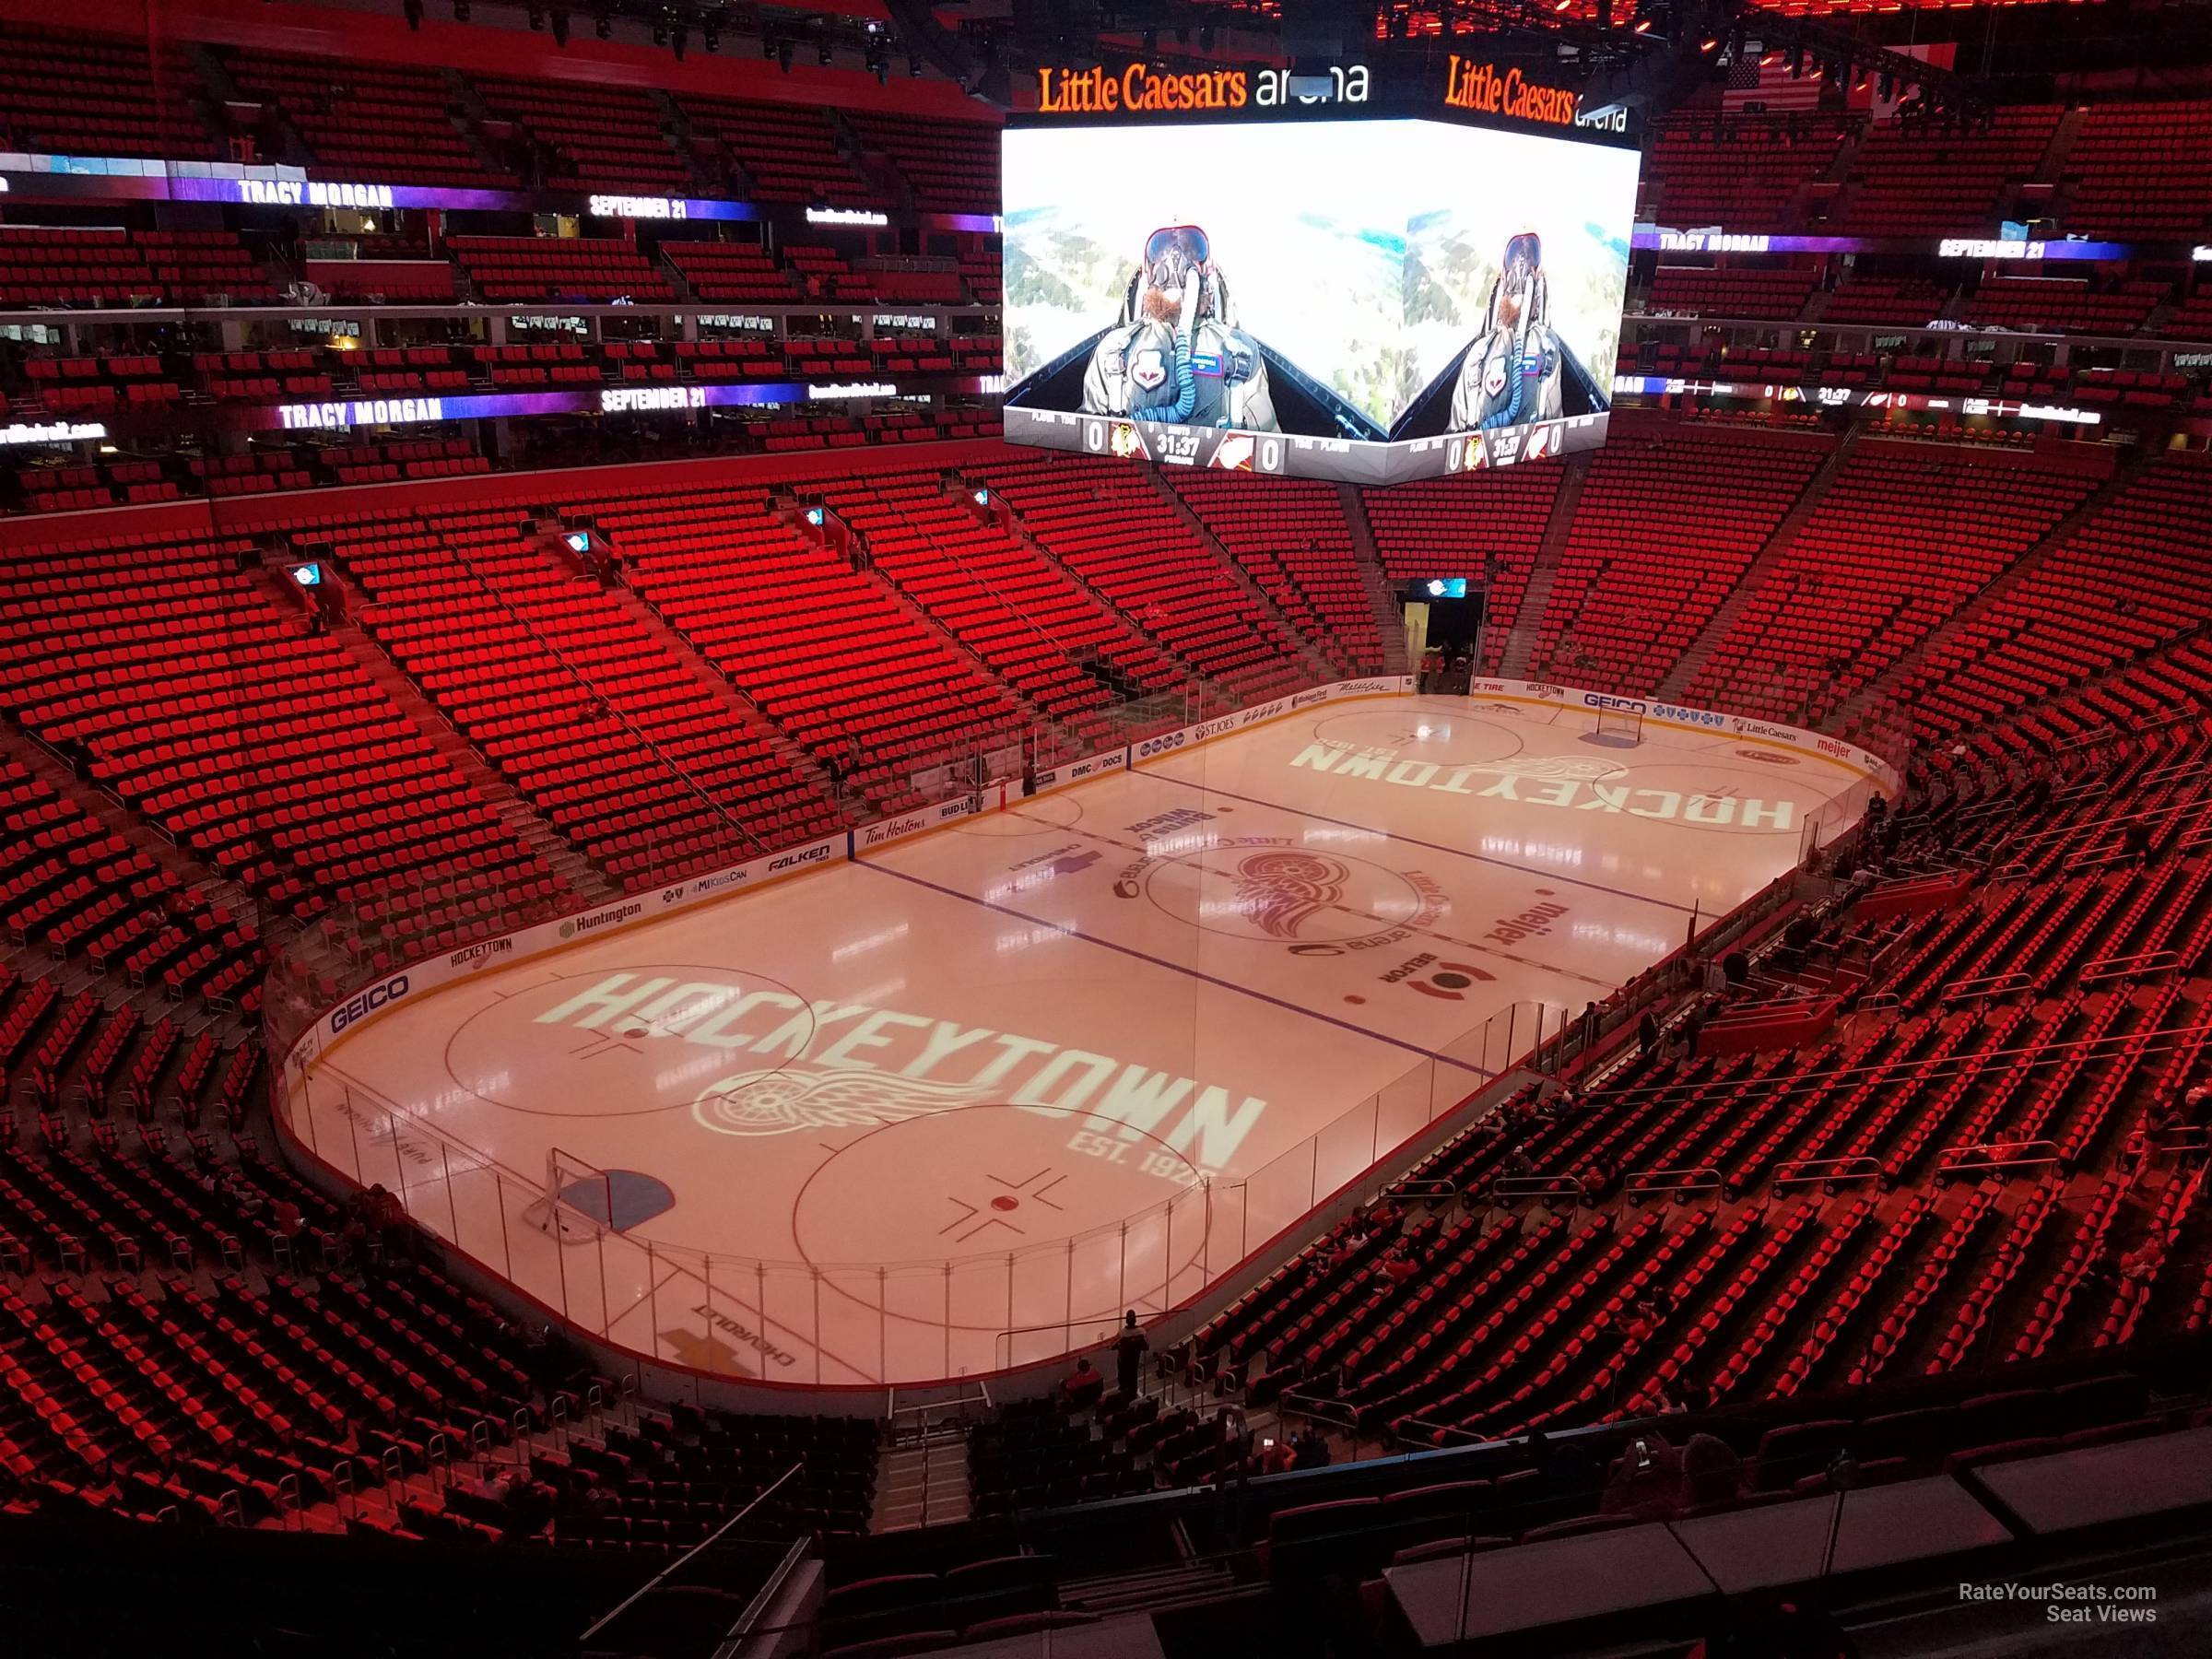 mezzanine 34, row 4 seat view  for hockey - little caesars arena